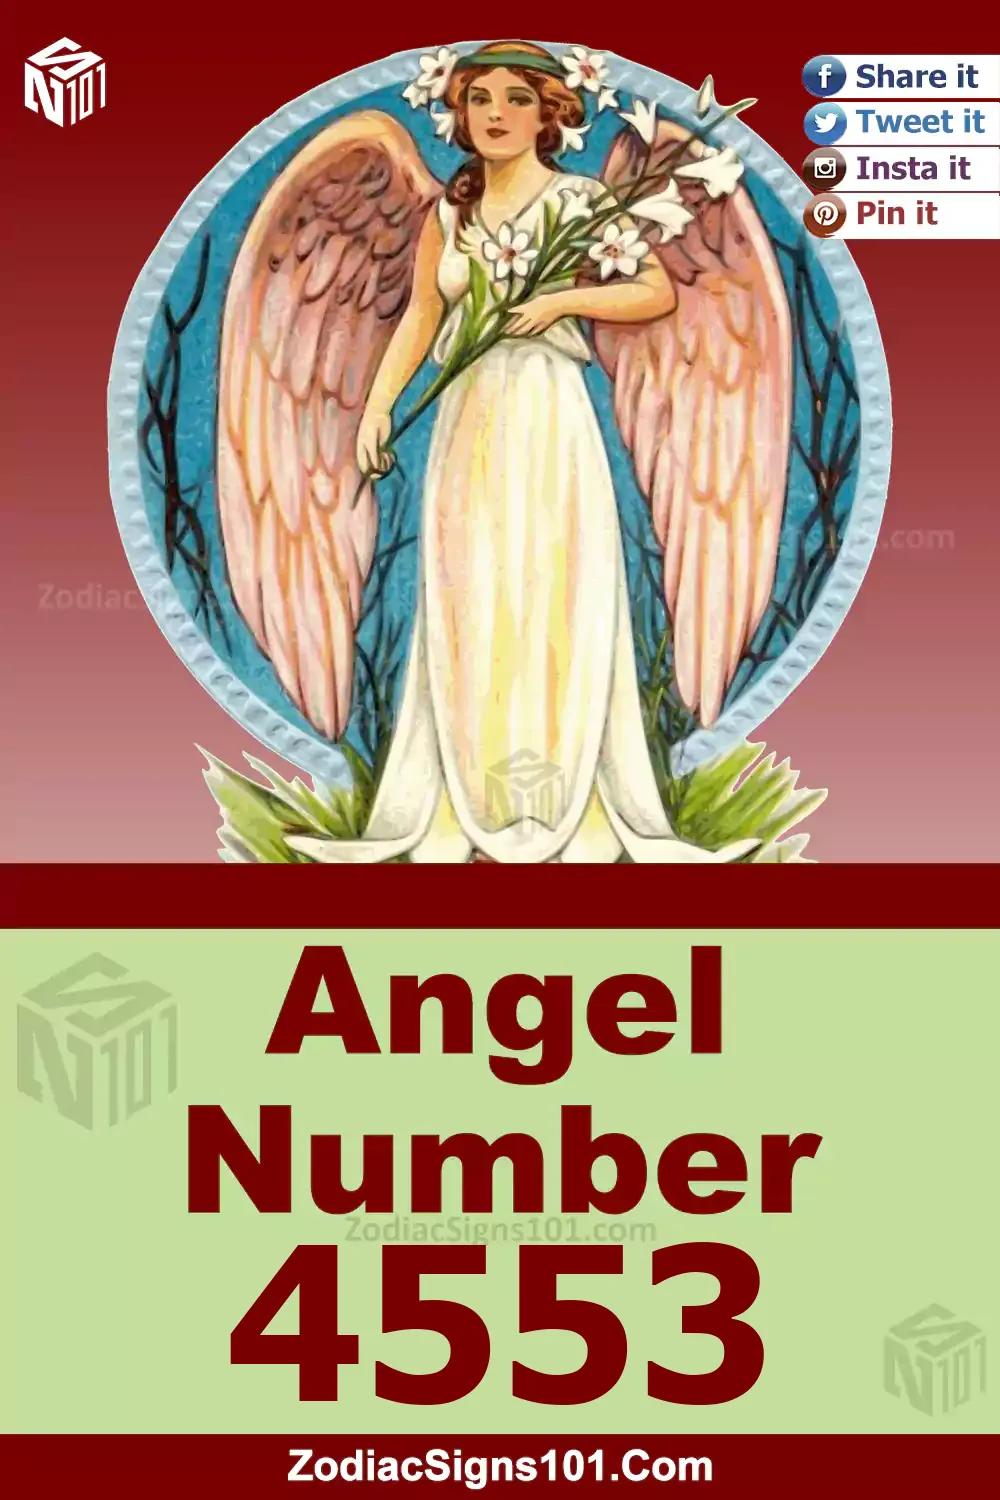 4553-Angel-Number-Meaning.jpg